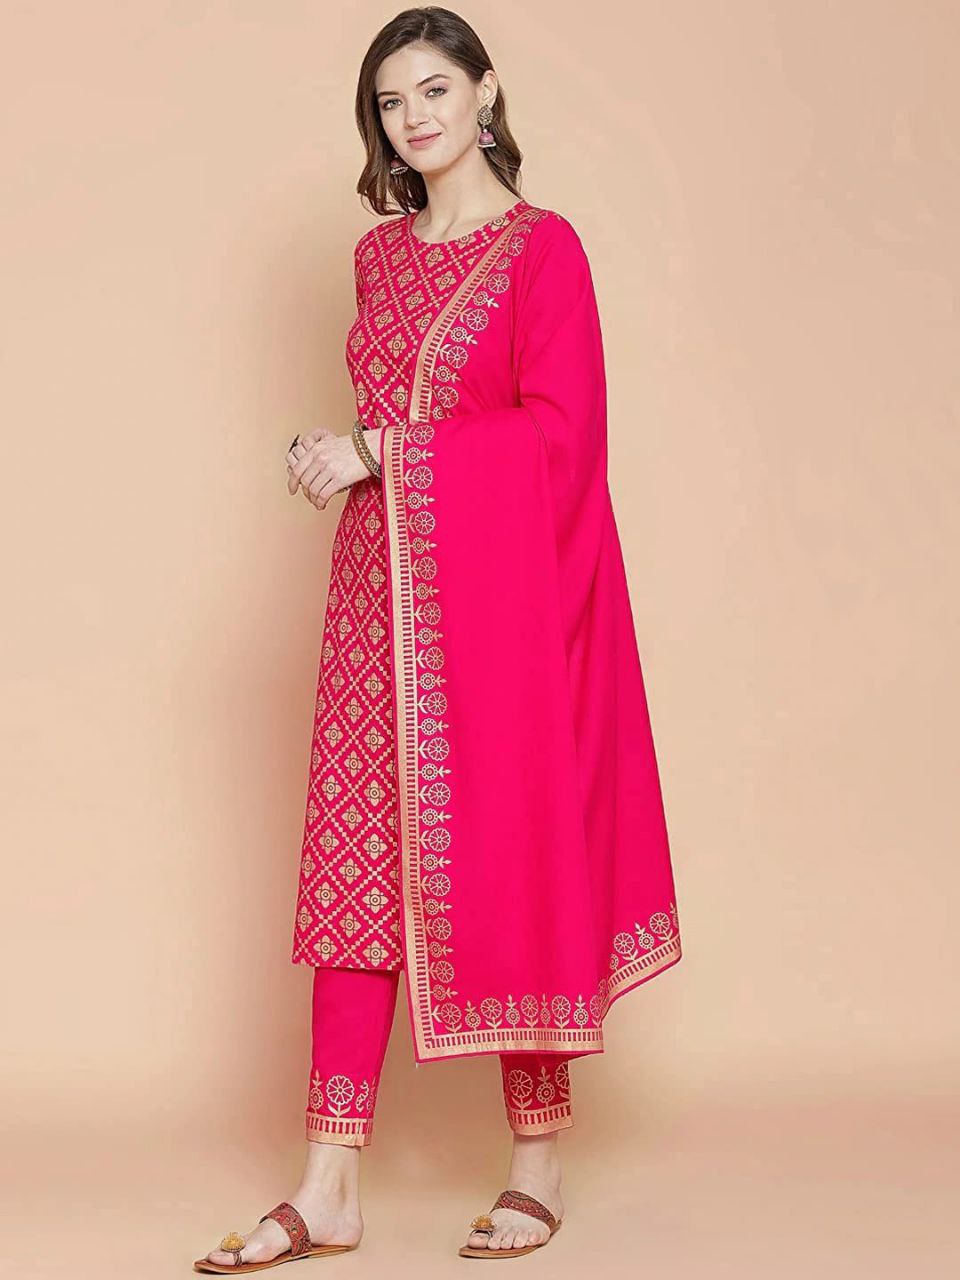 Party wear Jaipuri Cotton 3 Piece Women's Kurta Suit mahezon